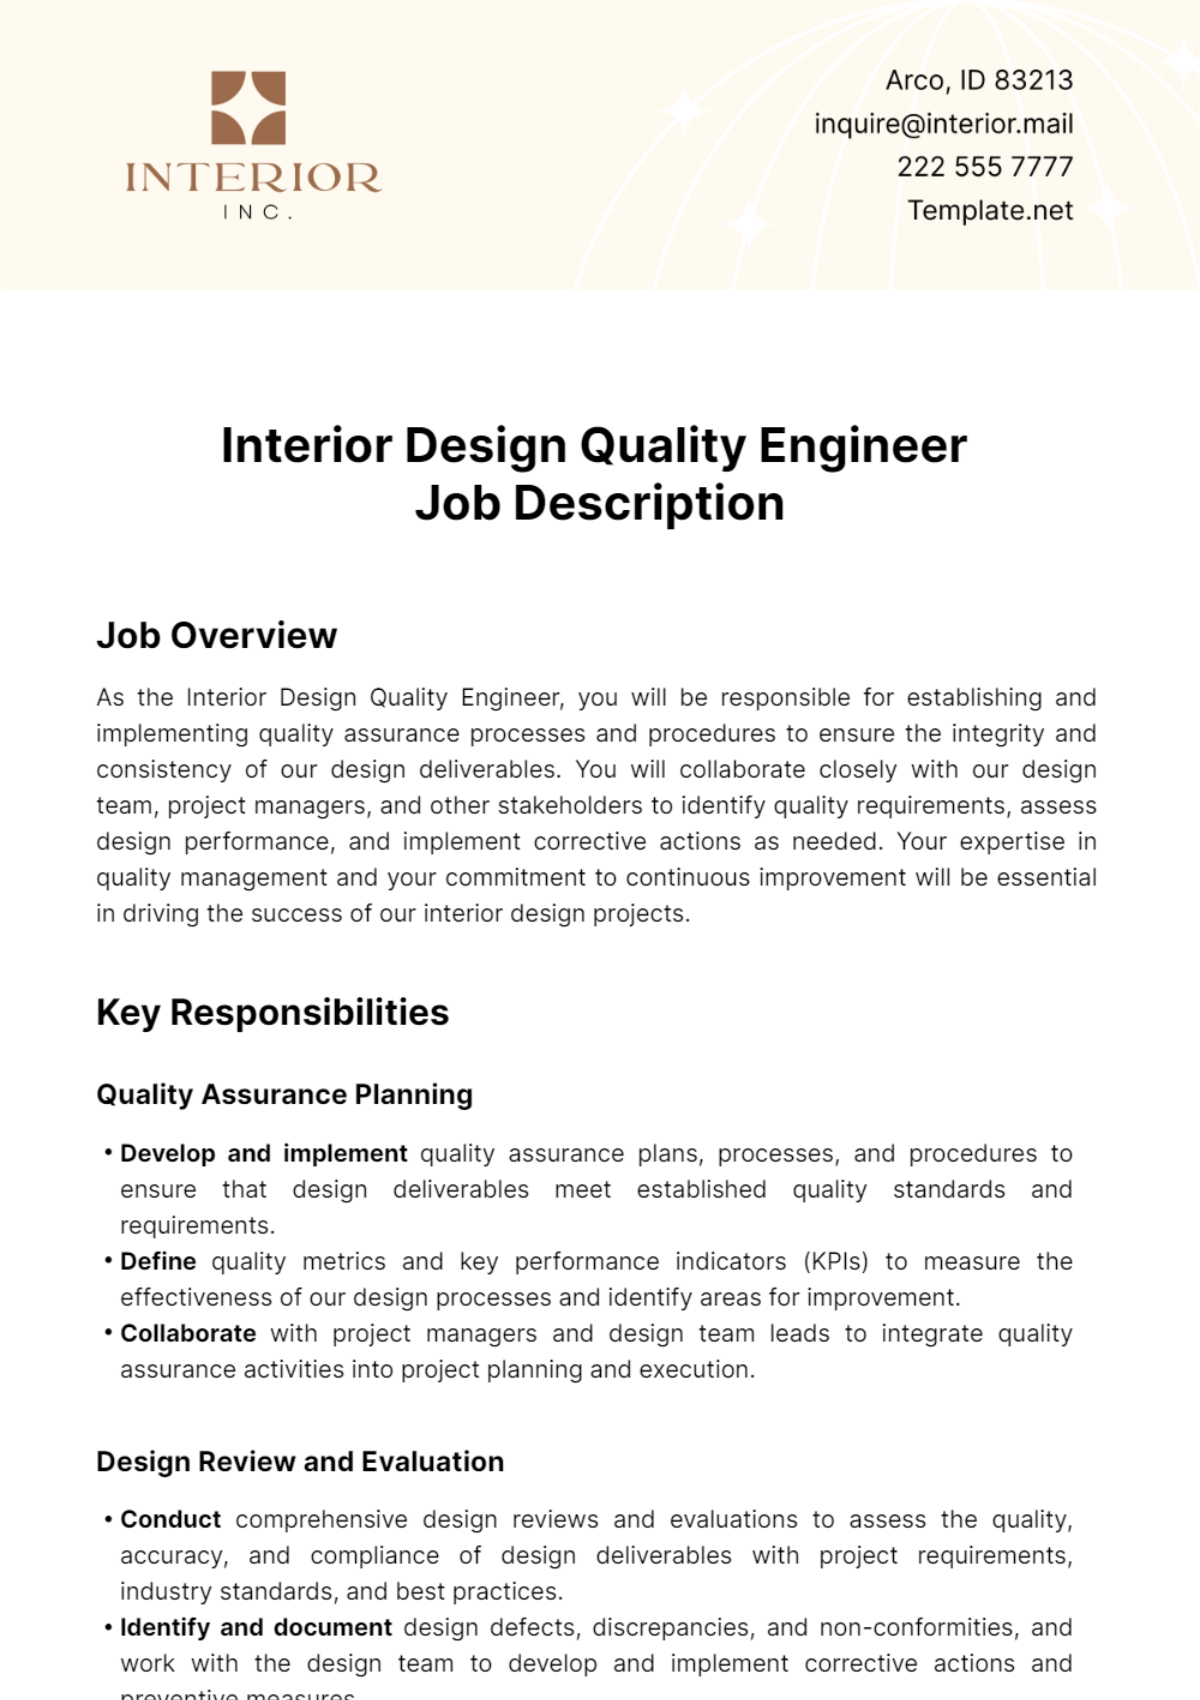 Free Interior Design Quality Engineer Job Description Template